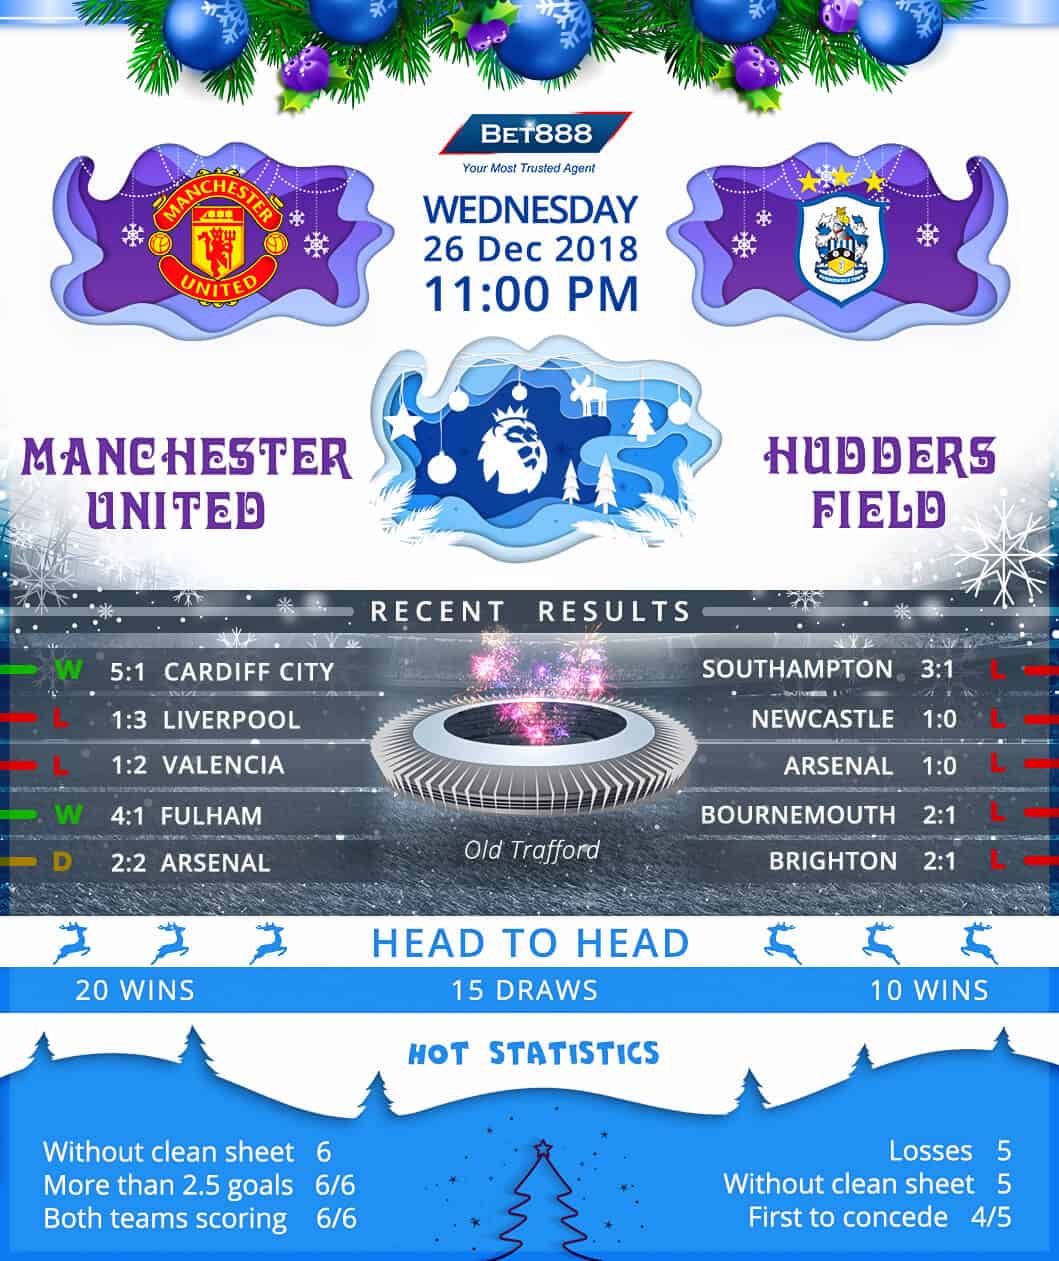 Manchester United vs Huddersfield Town 26/12/18